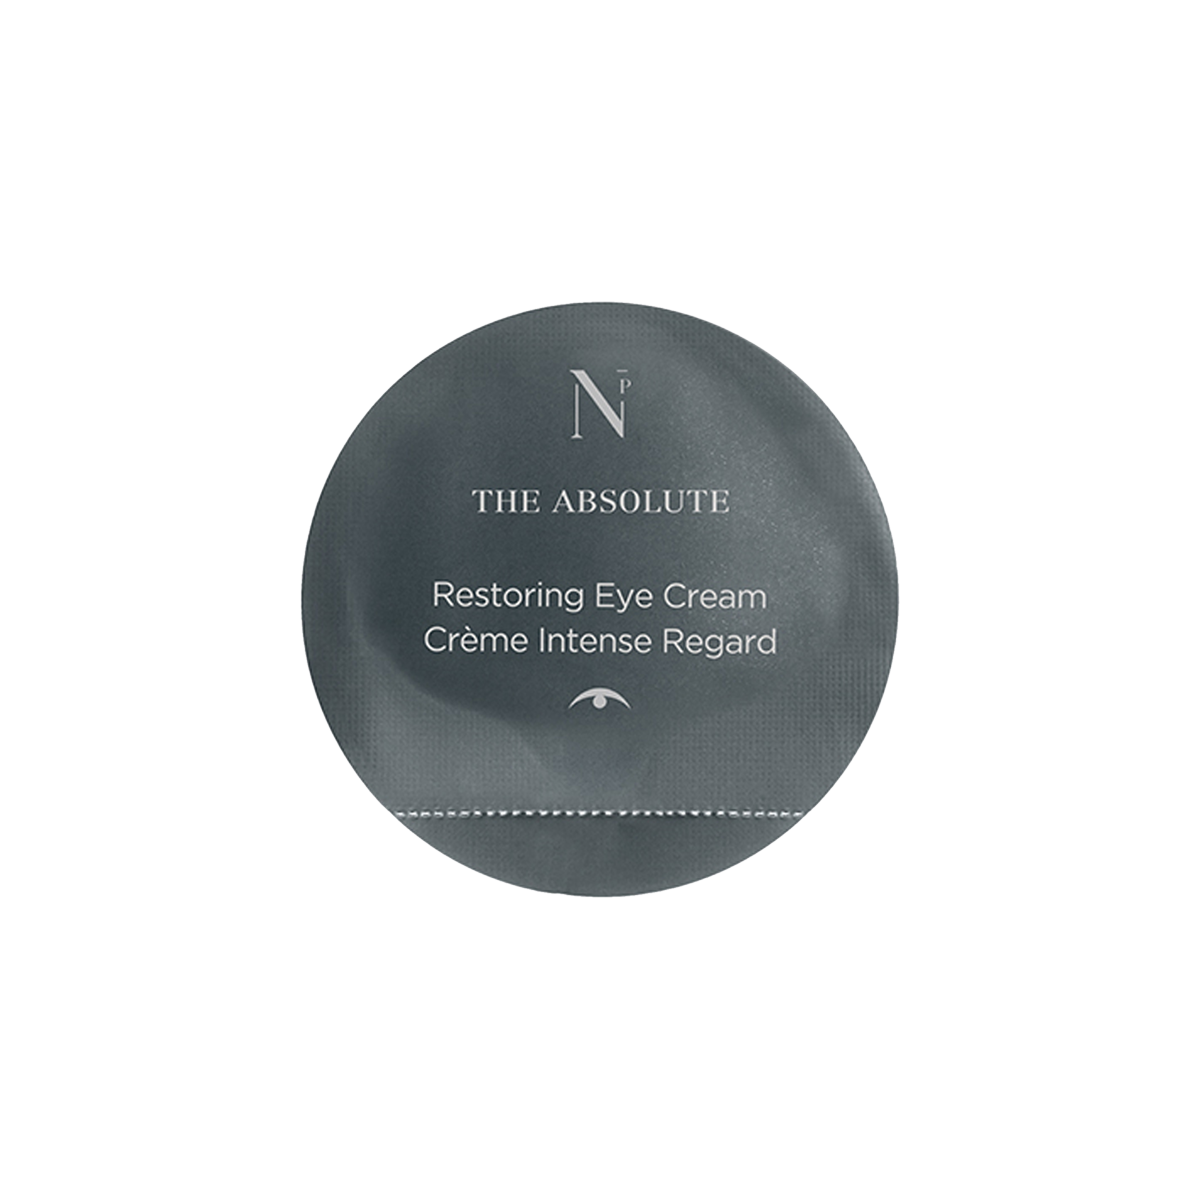 Restoring Eye Cream